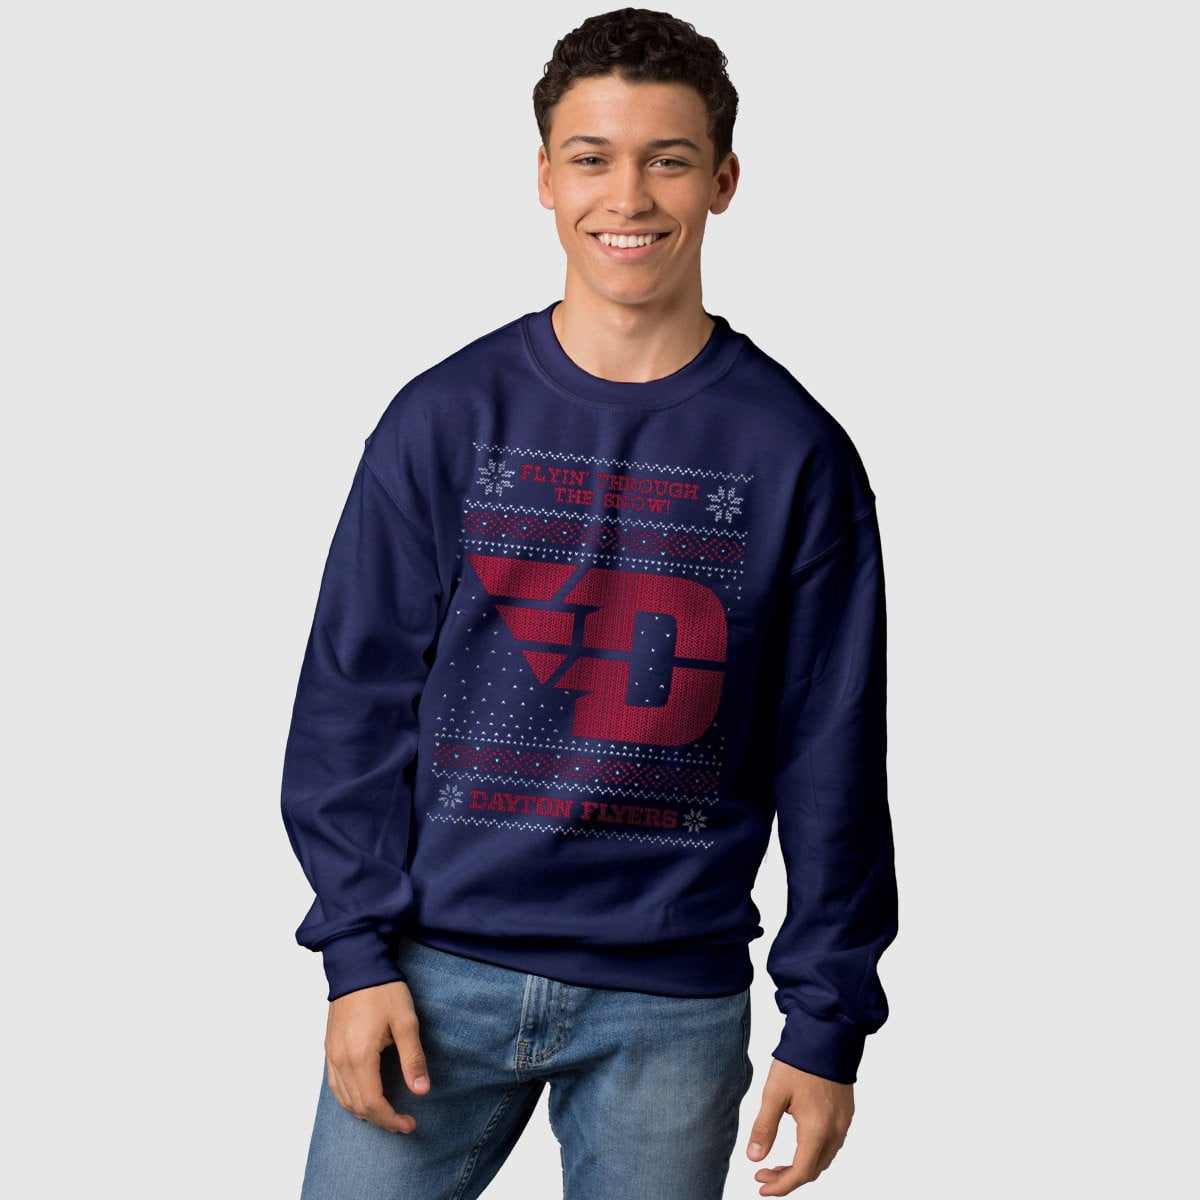 Vintage Dayton Flyers Sweatshirt